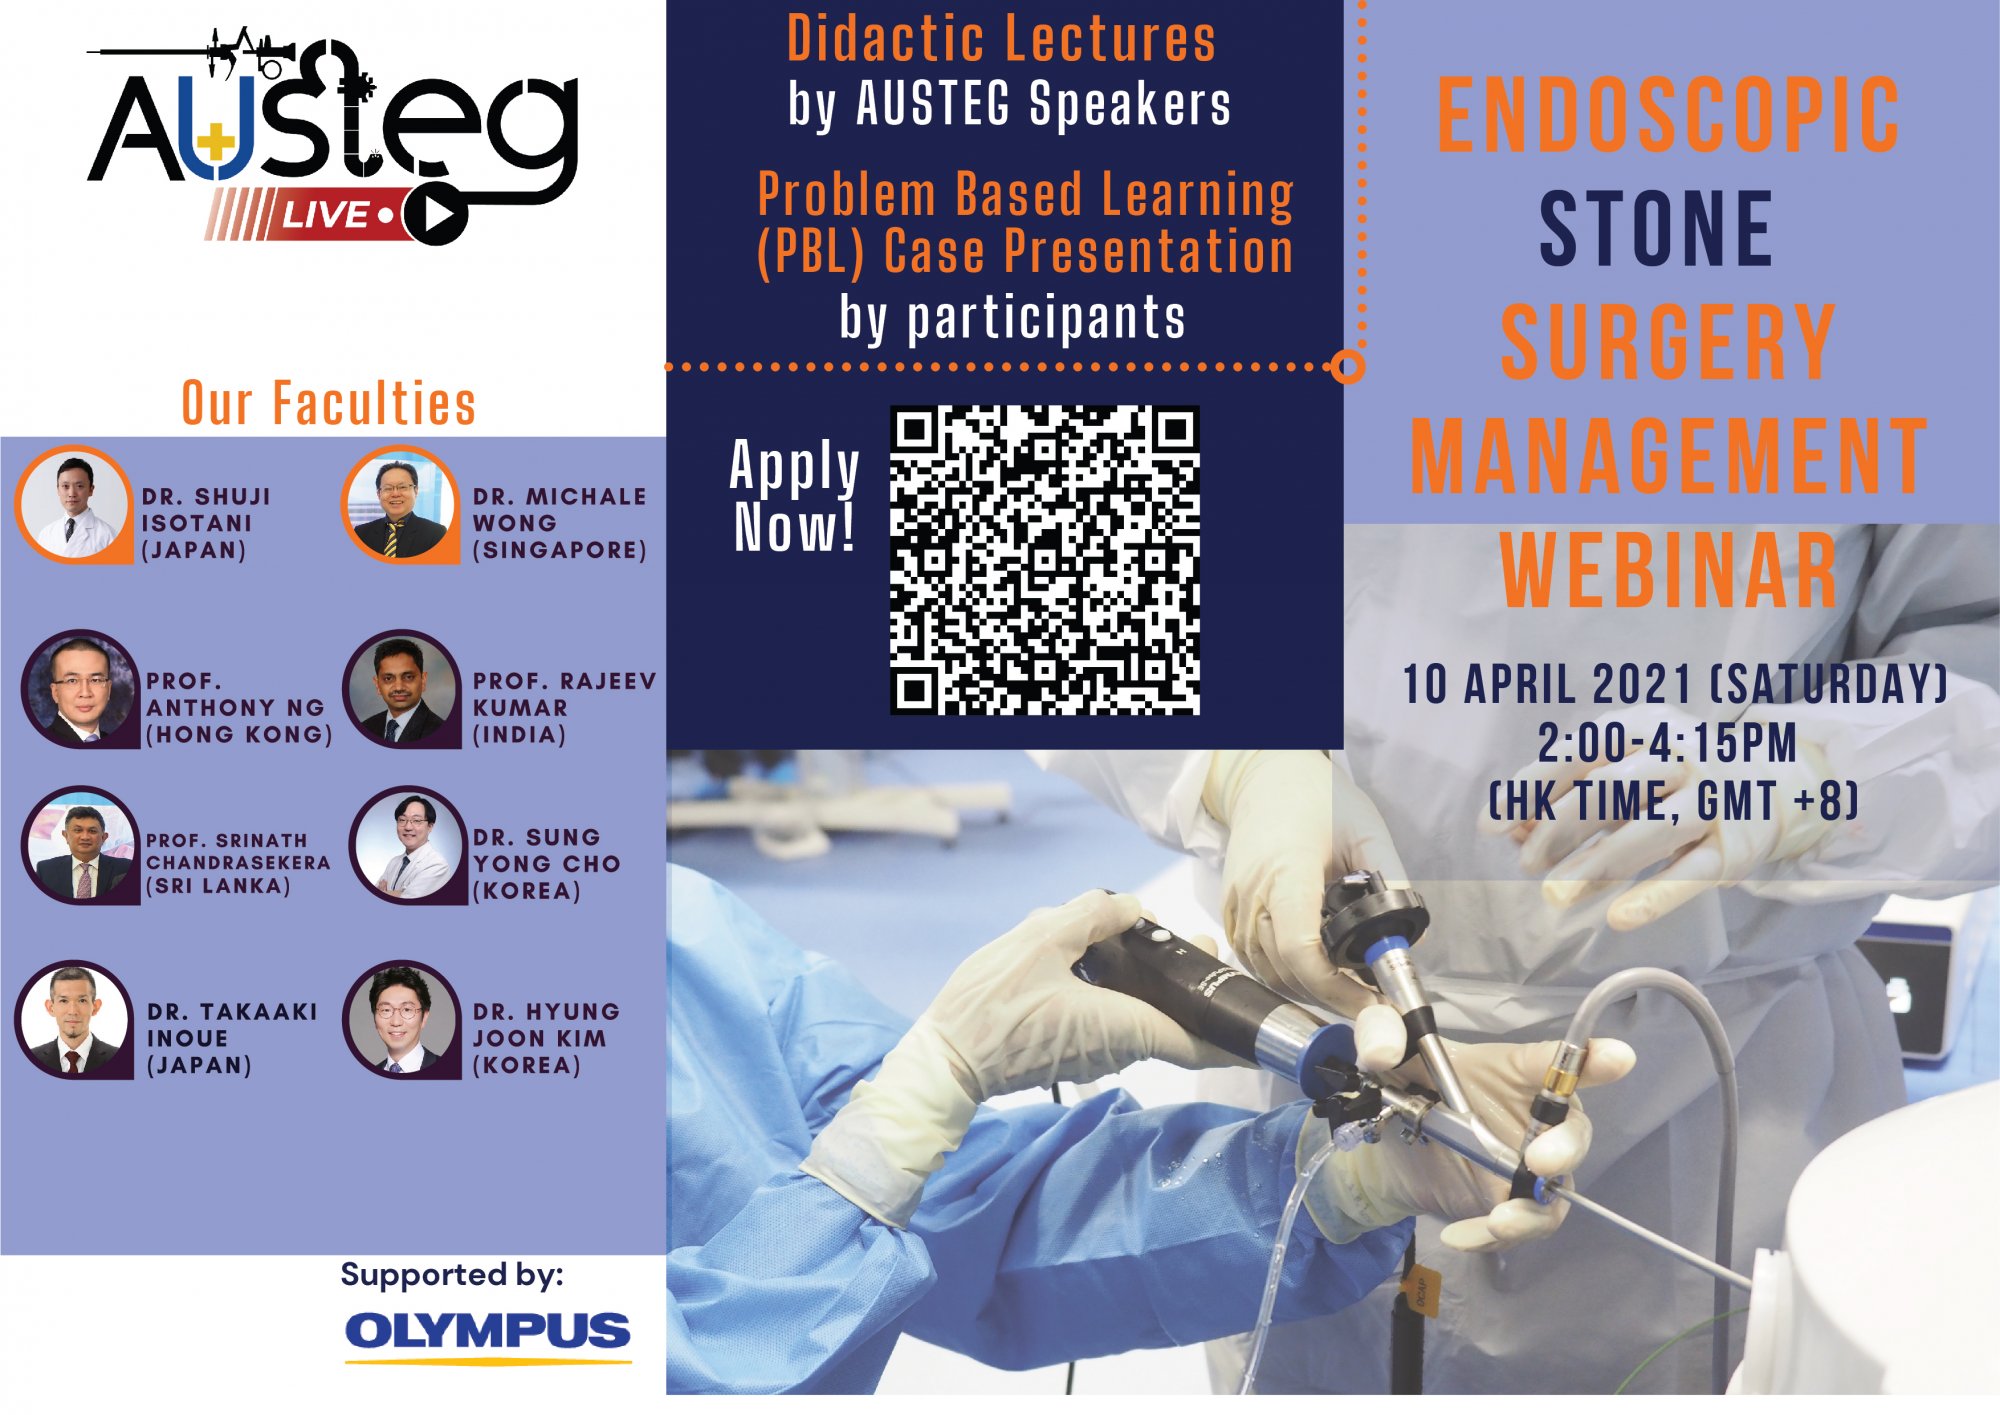 AUSTEG_Live_Endoscopic_Stone_Management_Webinar_programme_Page1-01